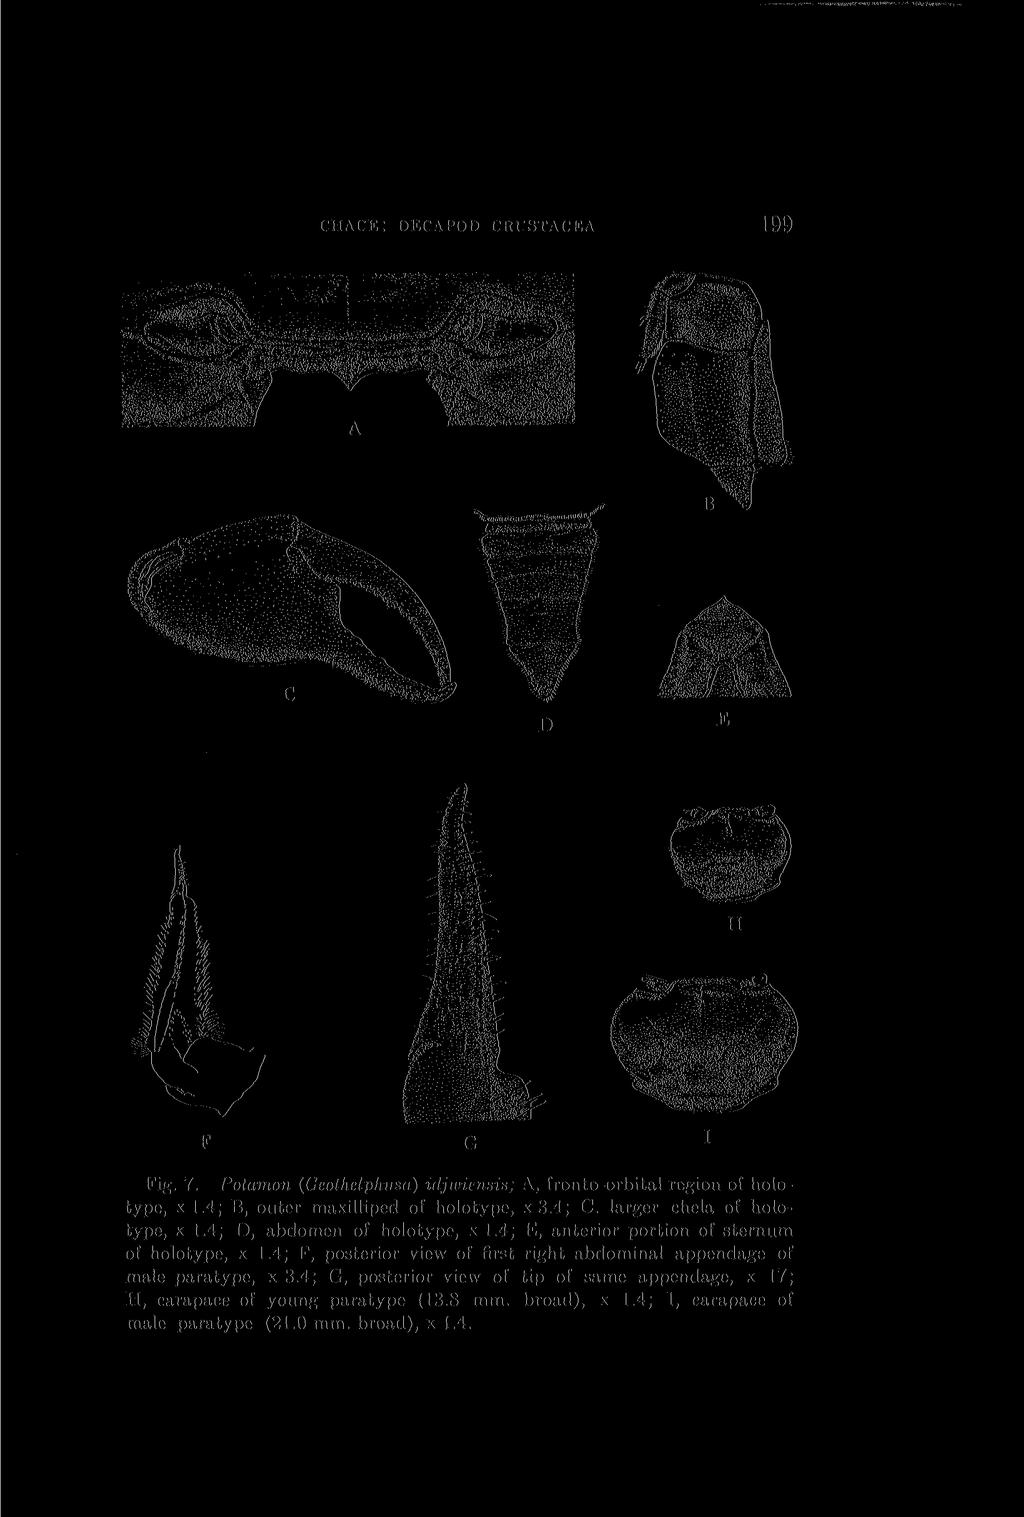 CHACE: DECAPOD CRUSTACEA 199 Fig. 7. Potamon (Geothelphusa) idjimcnxut; A, fronto-orbital region of holotype, x 1.4; B, outer maxilliped of holotype, x3.4; C. larger chela of holotype, x 1.